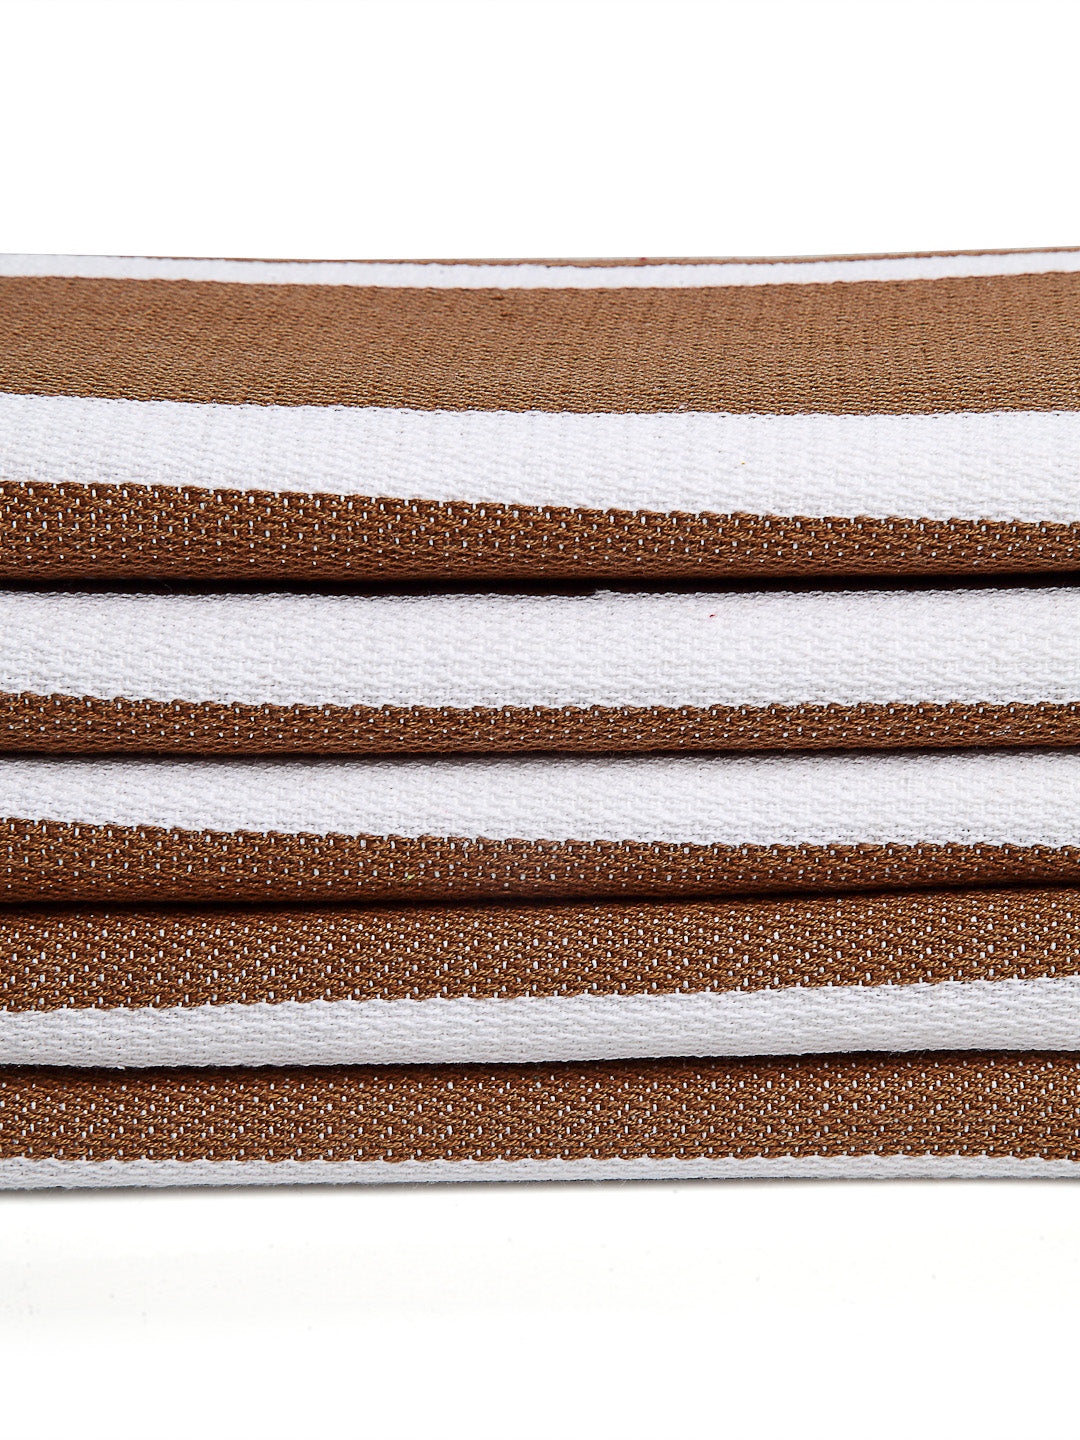 Arrabi Brown Stripes Handwoven Cotton Hand Towel (Set of 5) (85 X 35 cm)